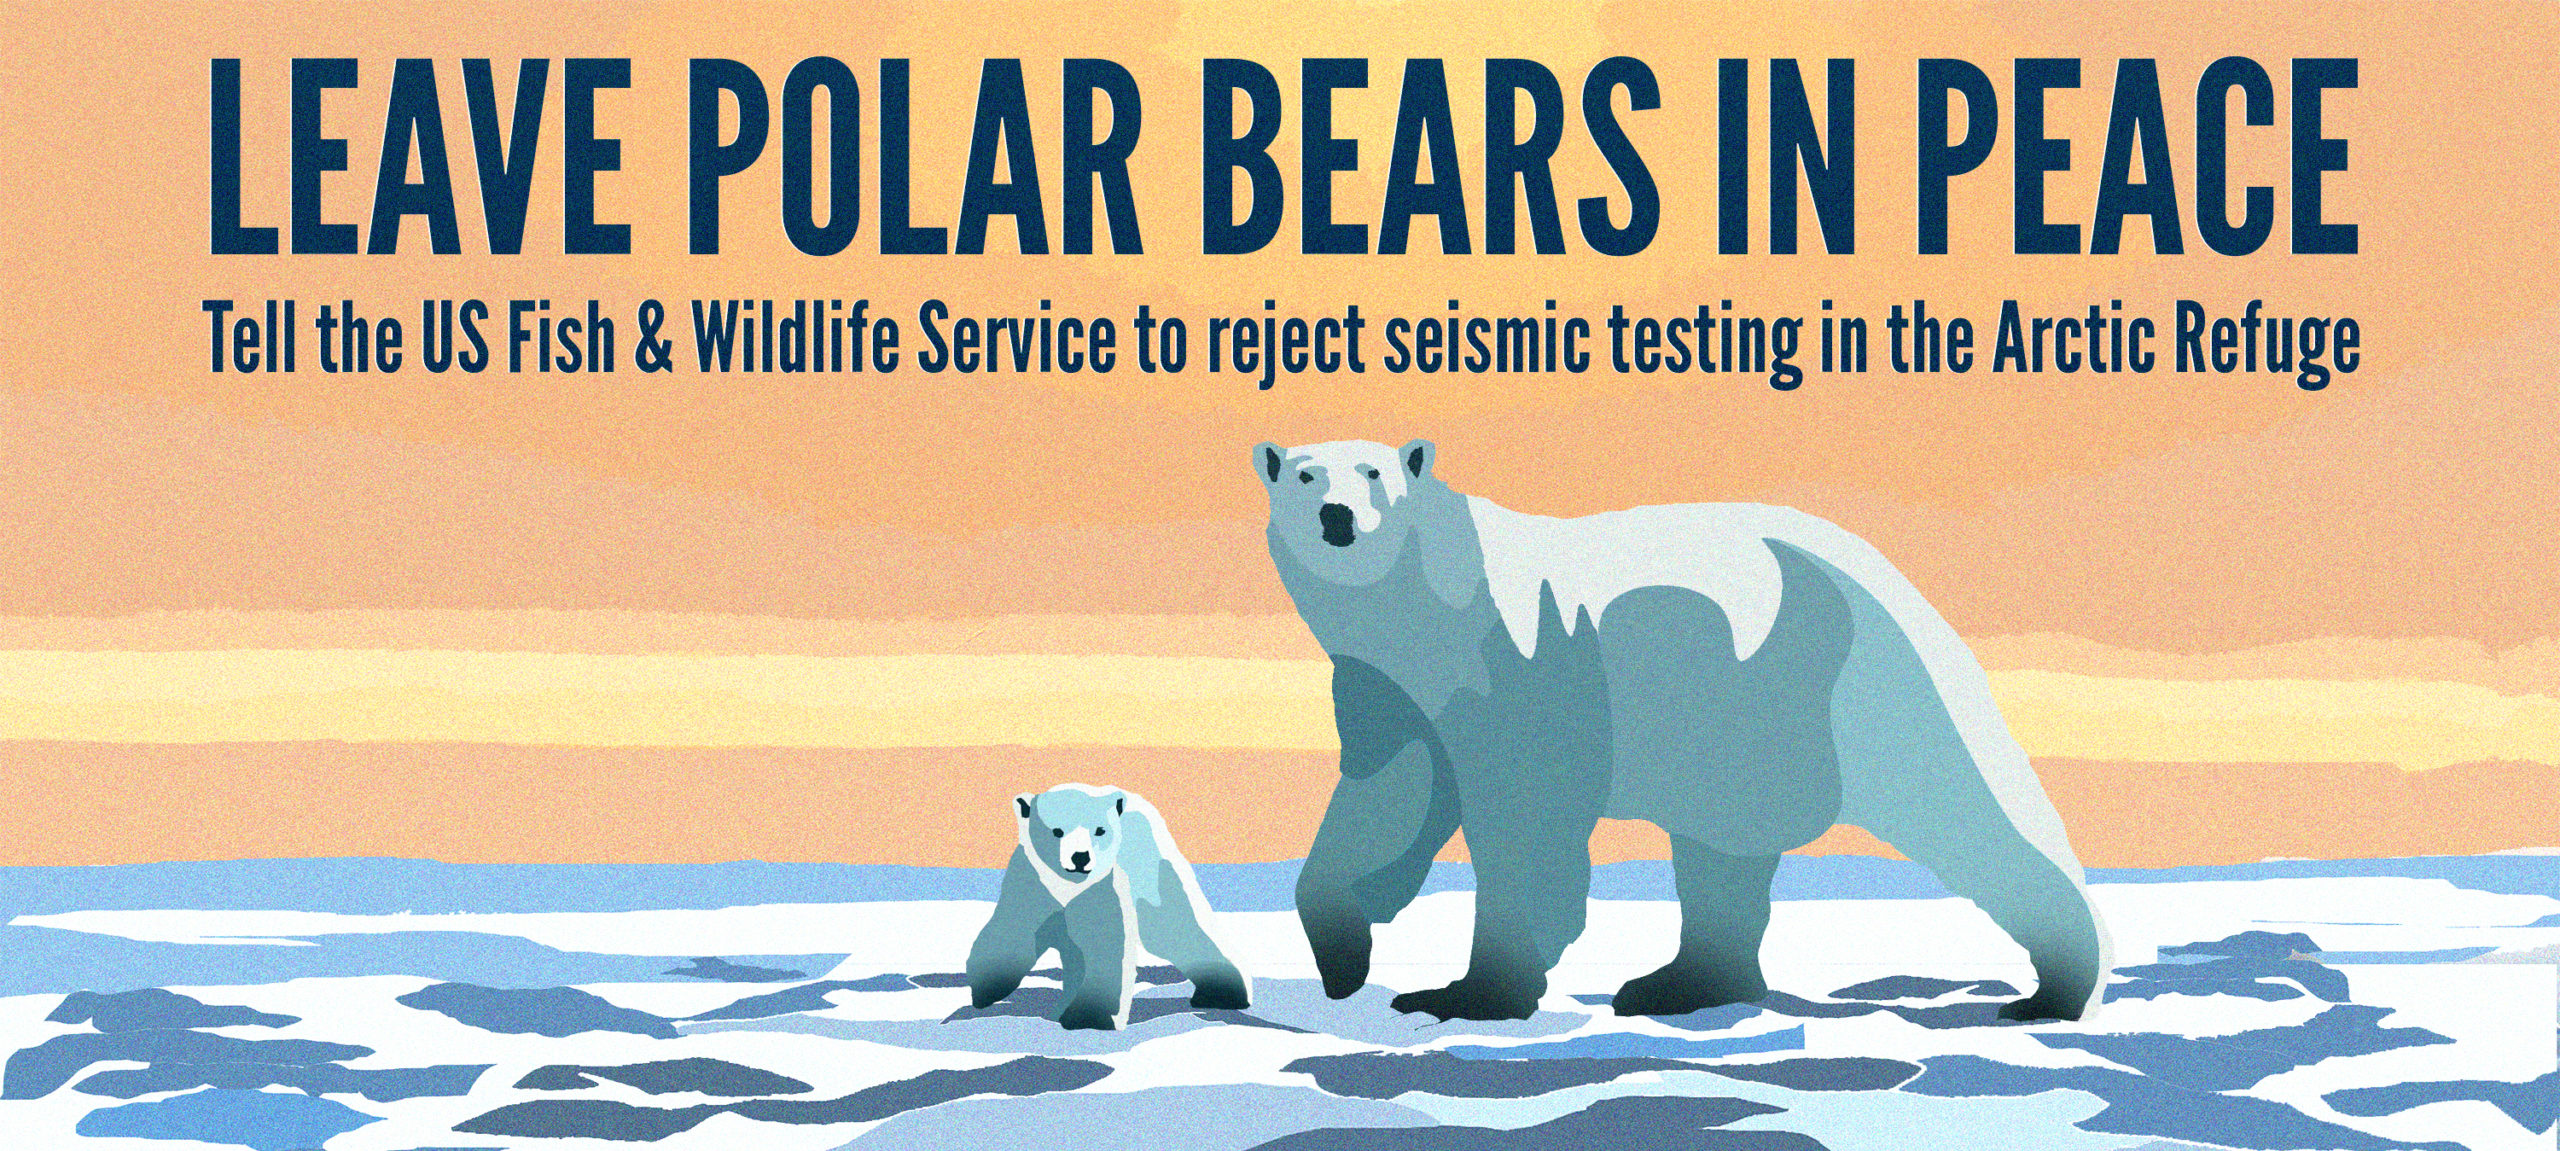 Polar bear banner (1)